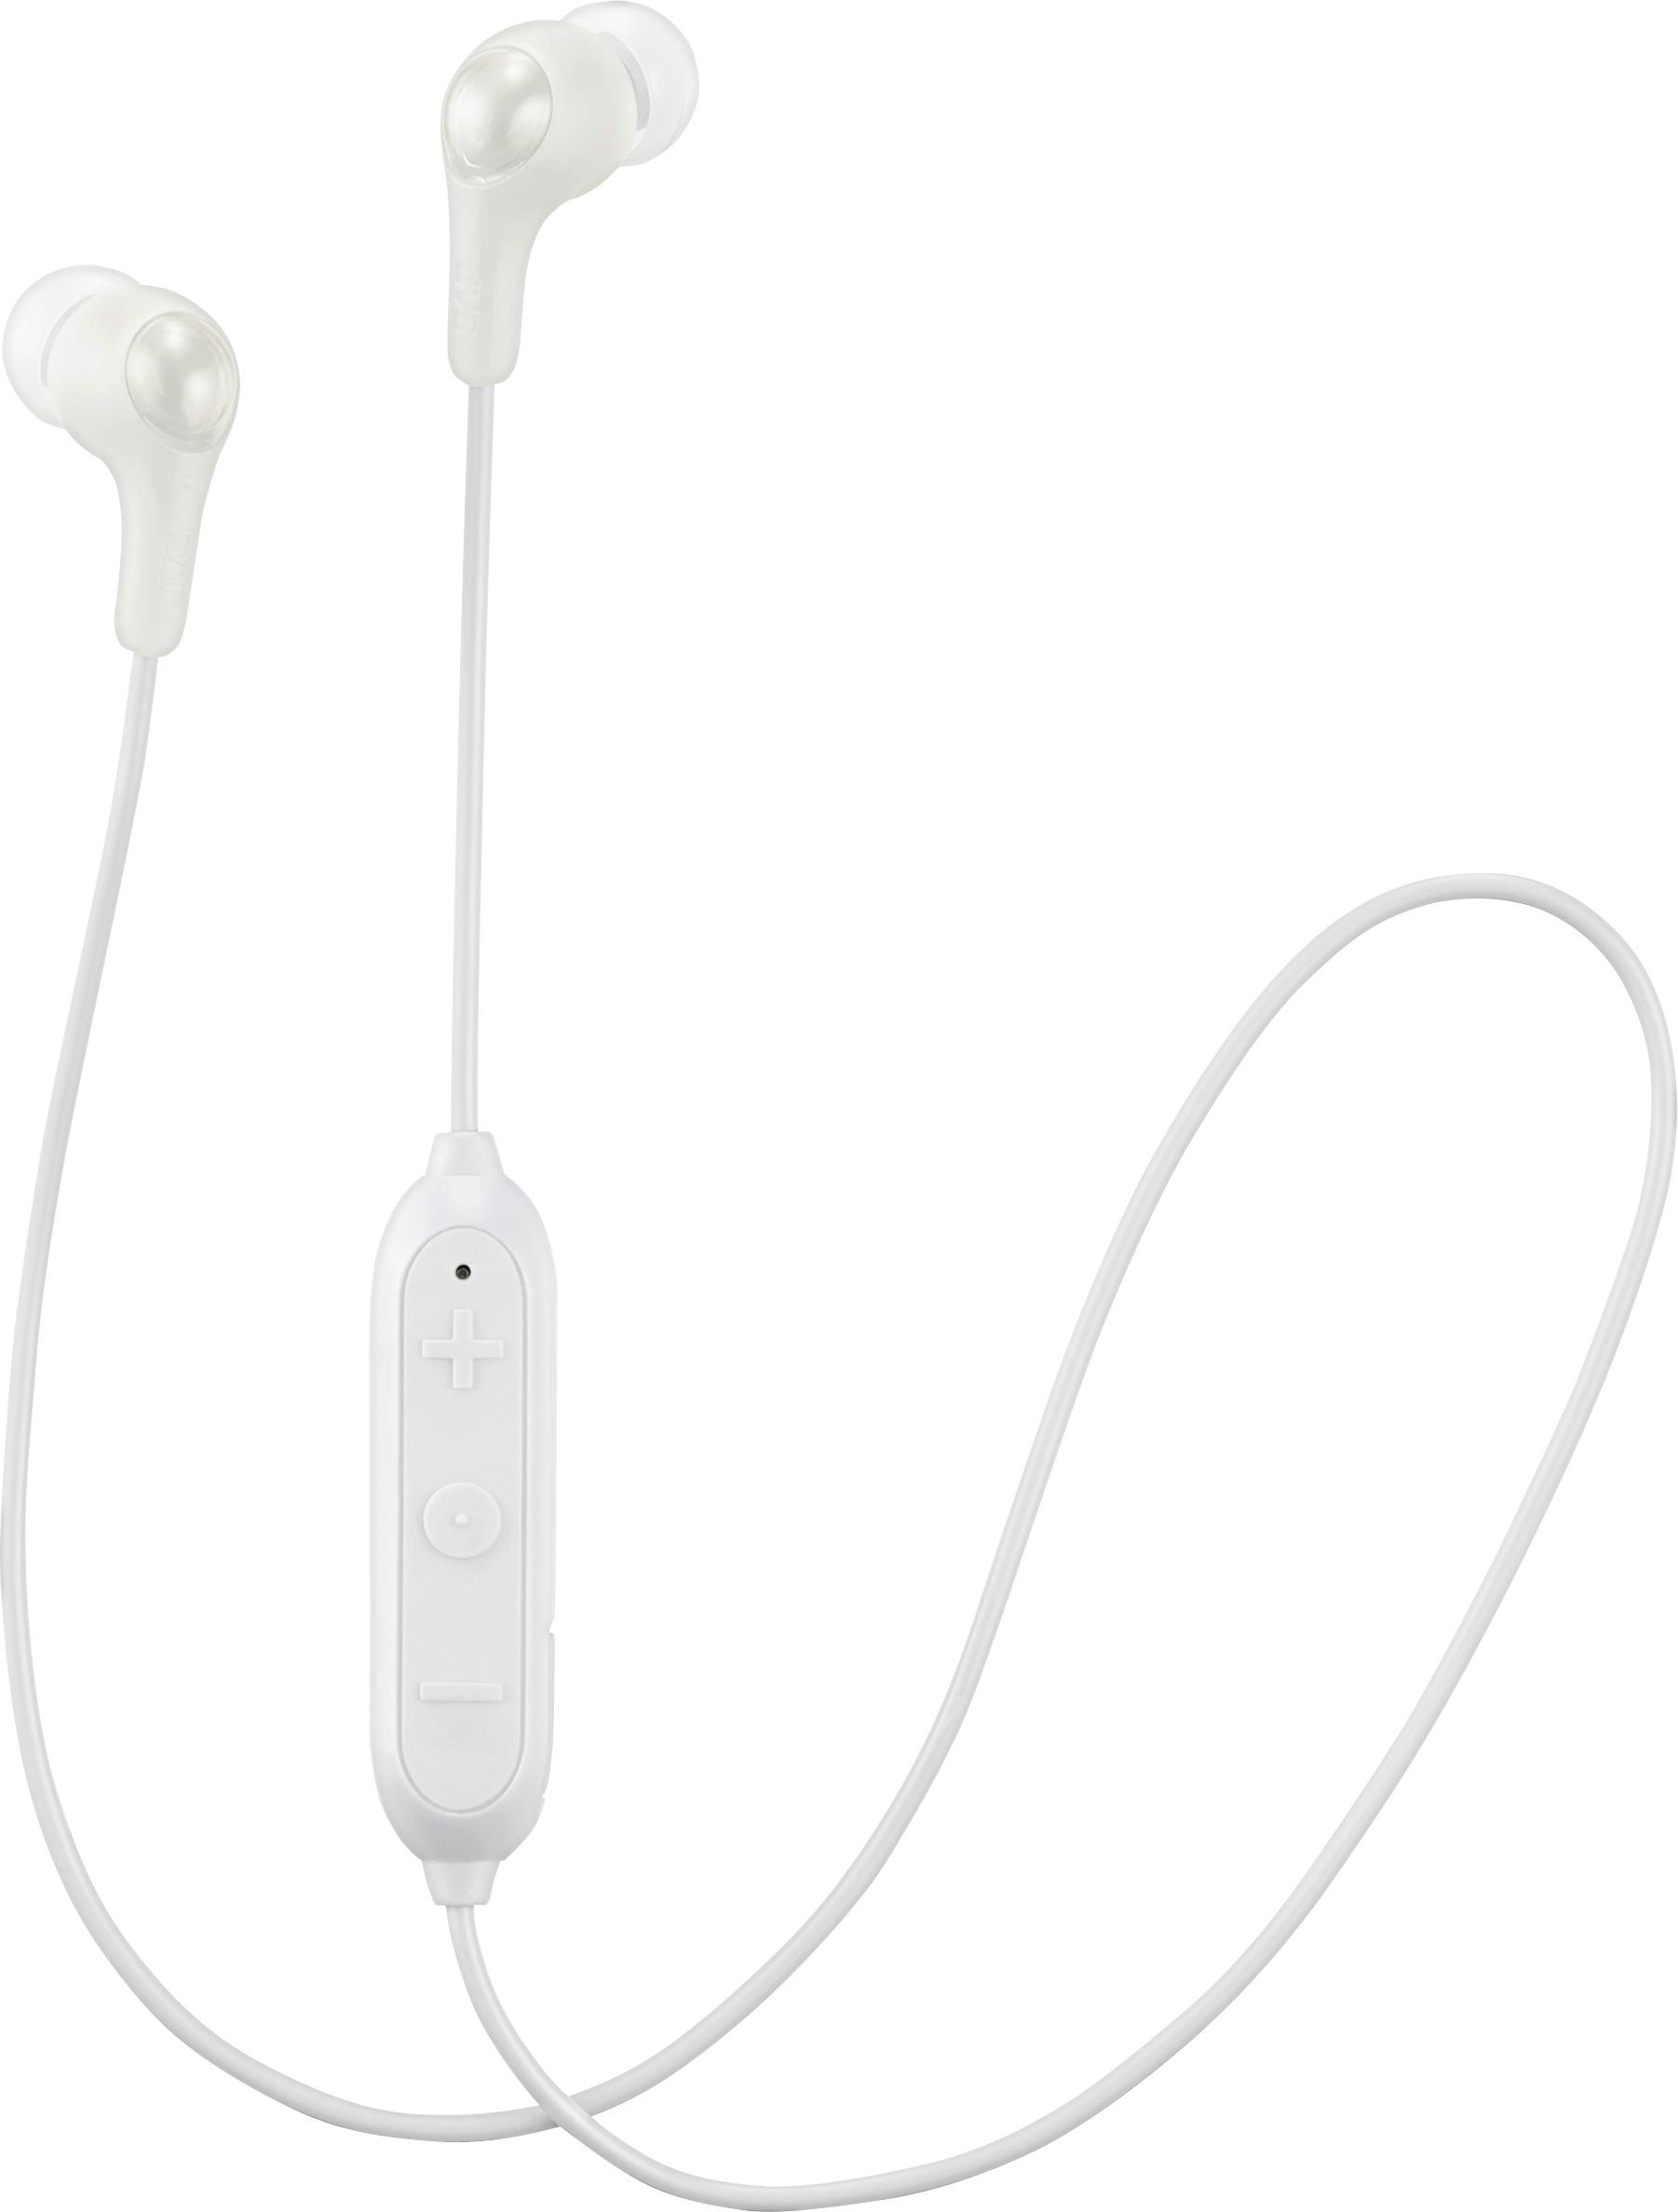 Angle View: JVC - HA FX9BT Gumy Wireless In-Ear Headphones (iOS) - White